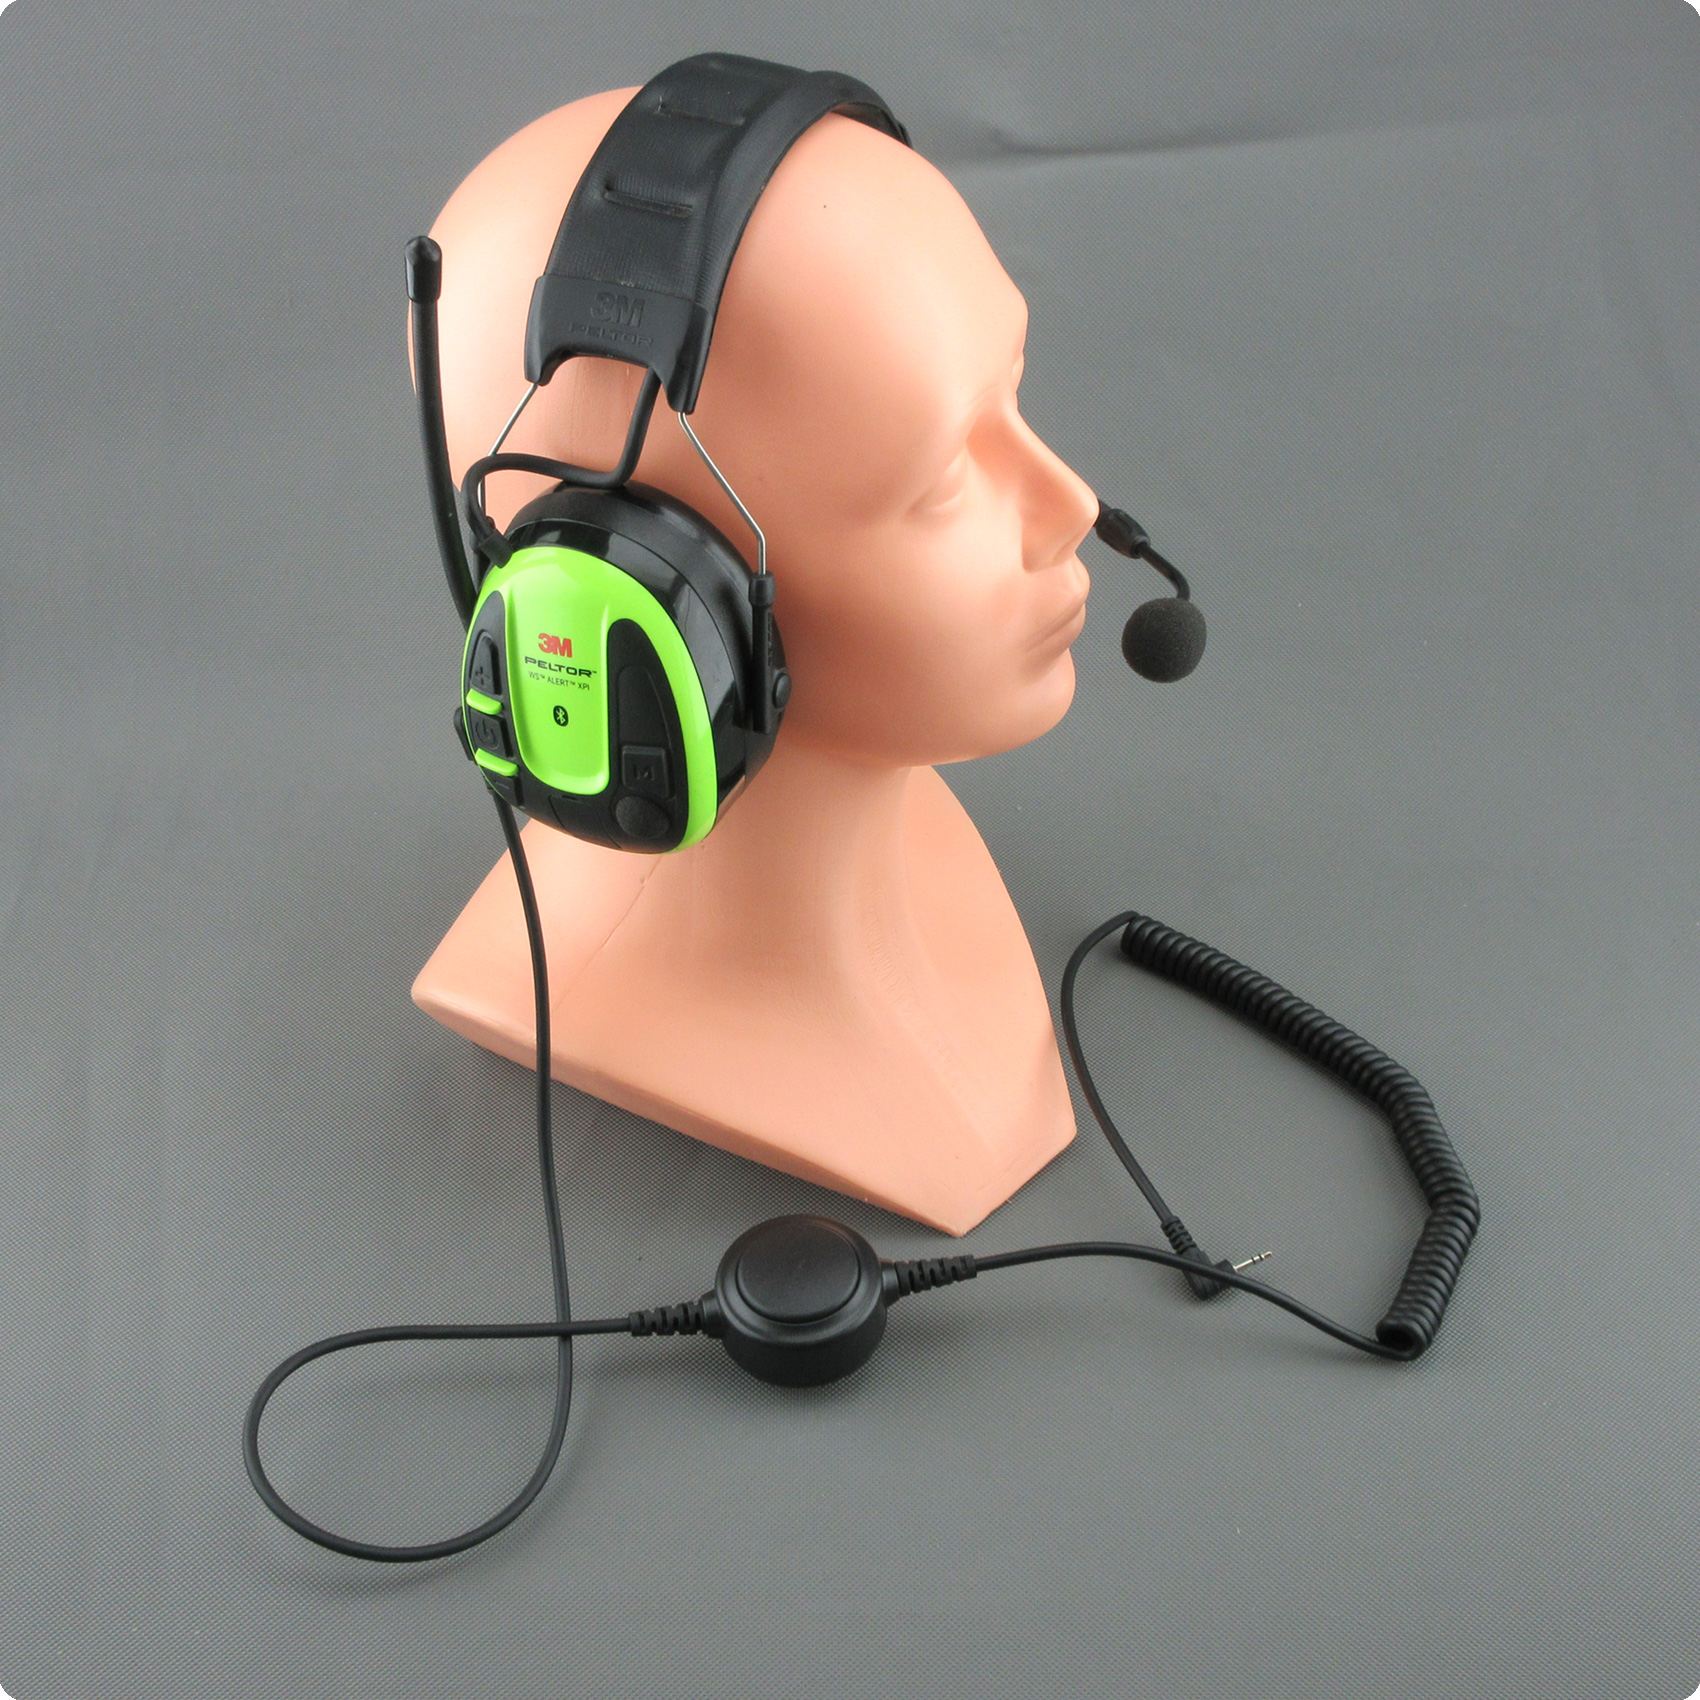 Interfaz de radio StarCom1 para sistemas de protección auditiva 3M® /Peltor® WS-Alert-XPI